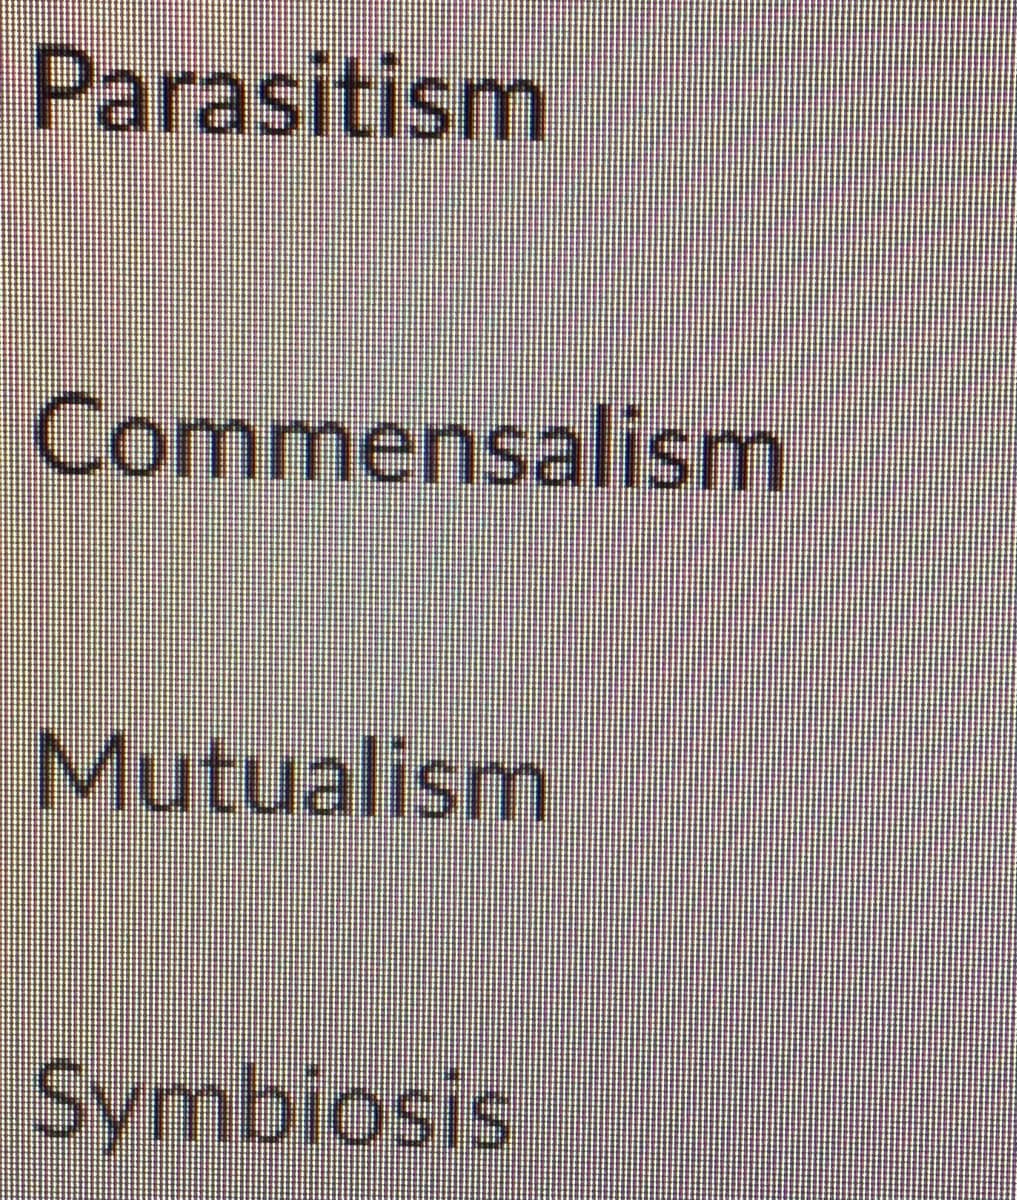 Parasitism
Commensalism
Mutualism
Symblosis
